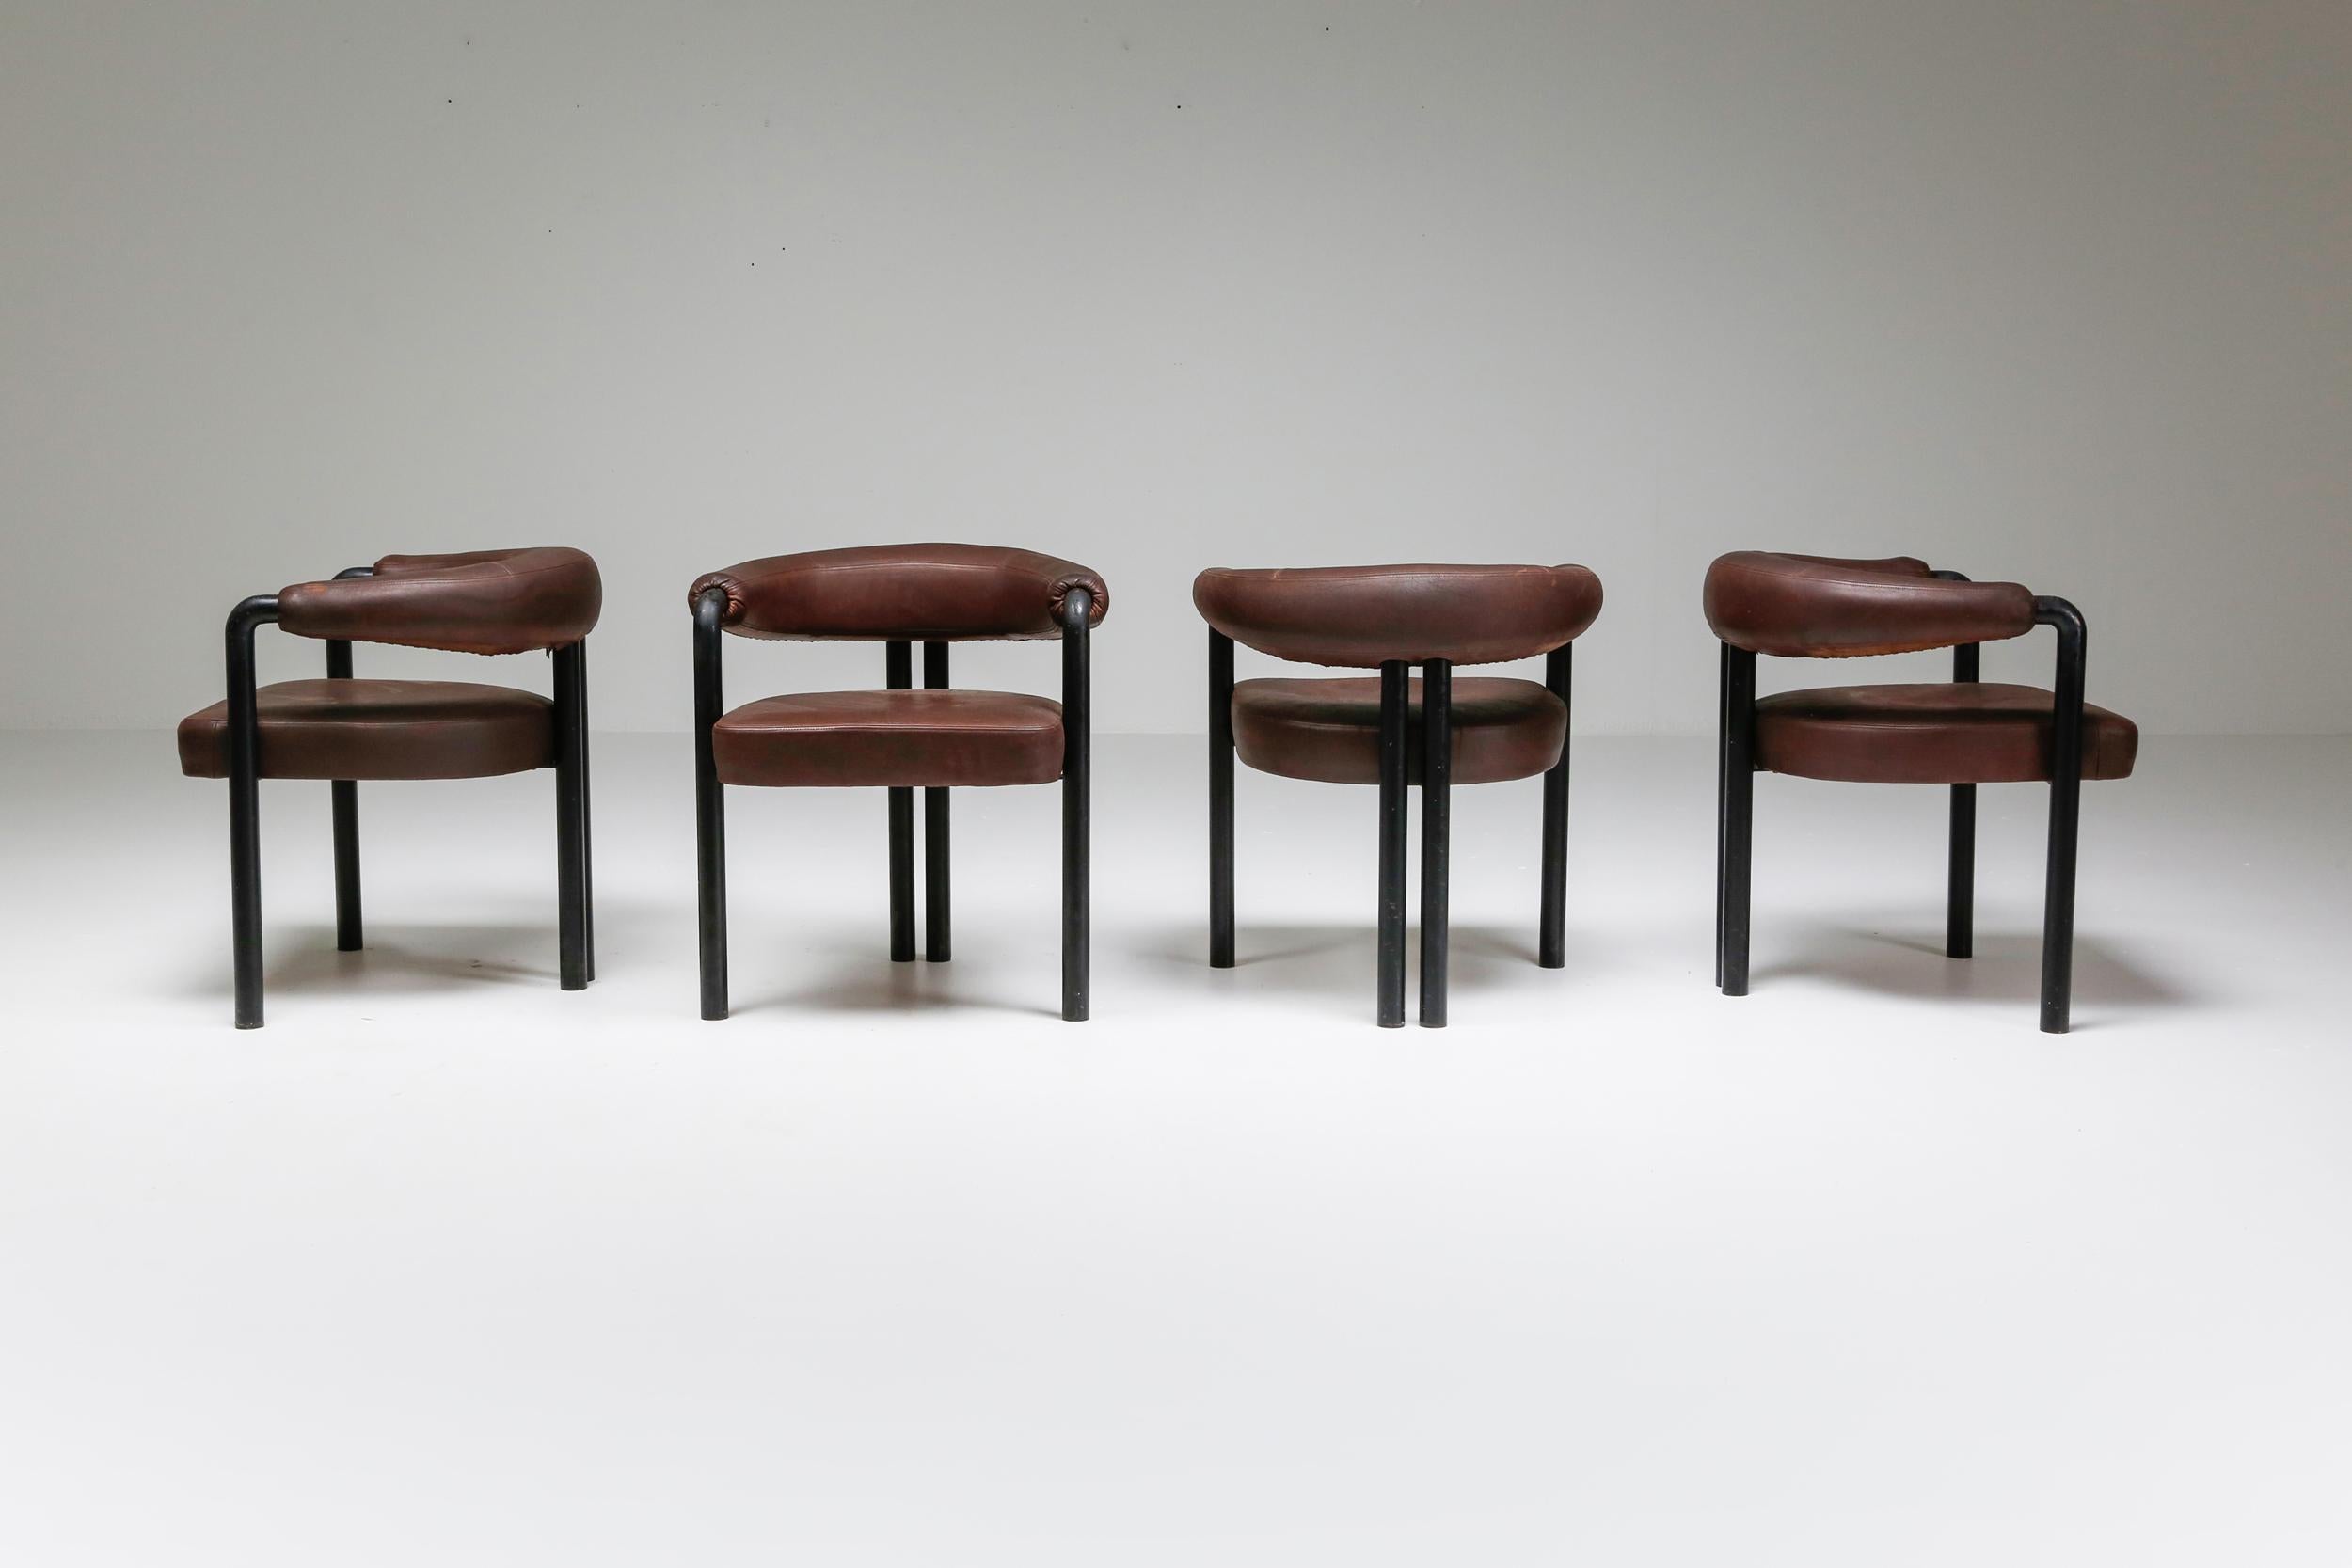 Swiss De Sede Dining Chairs by Nienkamper in Brown Leather and Black Tubular Steel